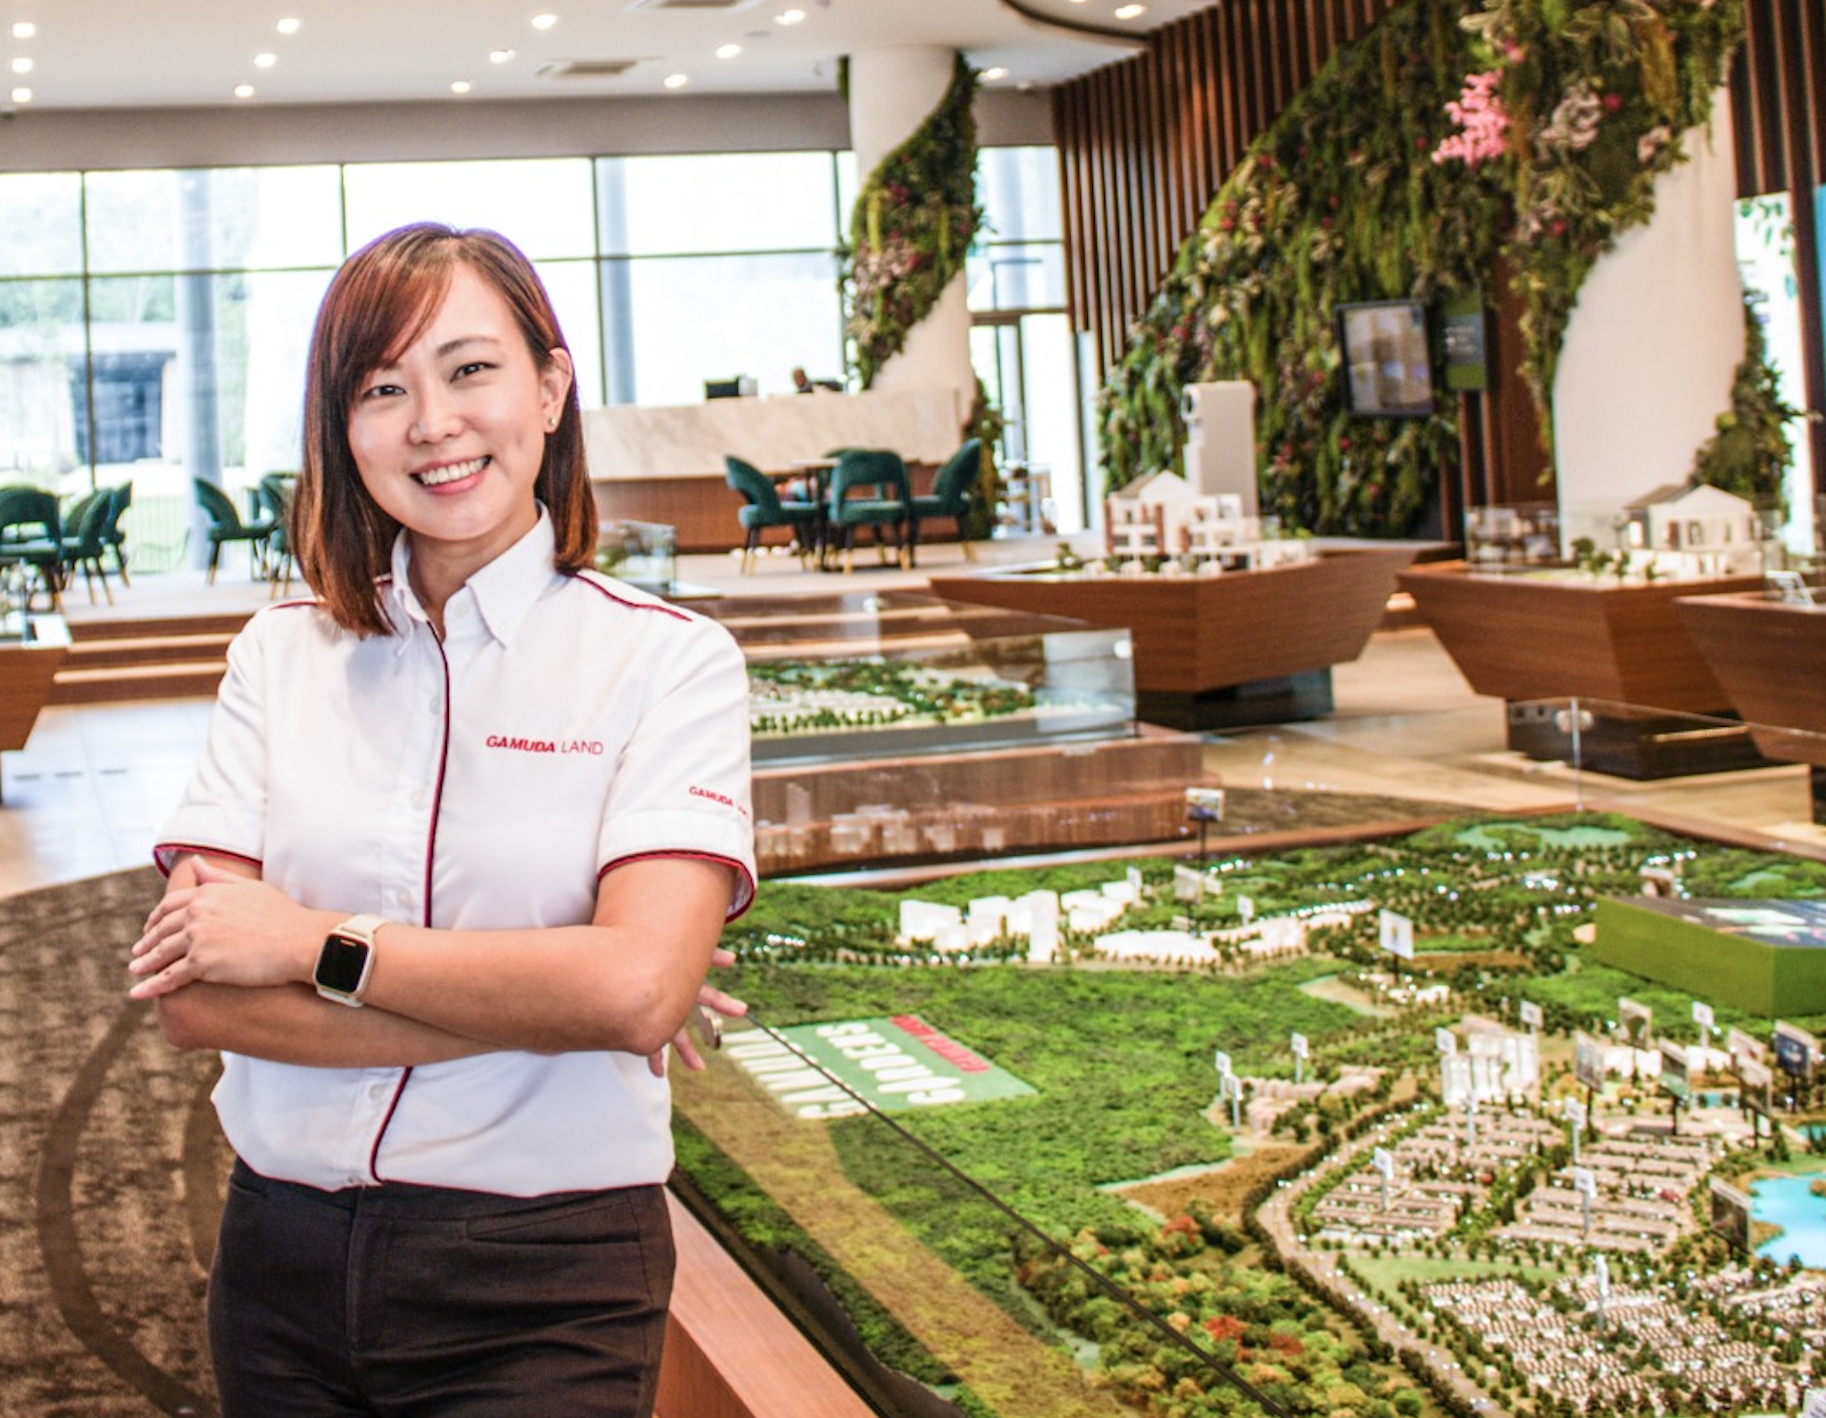 Gardens Square bakal memanfaatkan lokasi Lembah Klang Utara yang strategik dan memastikan komponen yang tepat serta tersedia bagi menampung demografi pelabur, perdagangan dan perumahan yang semakin meluas.